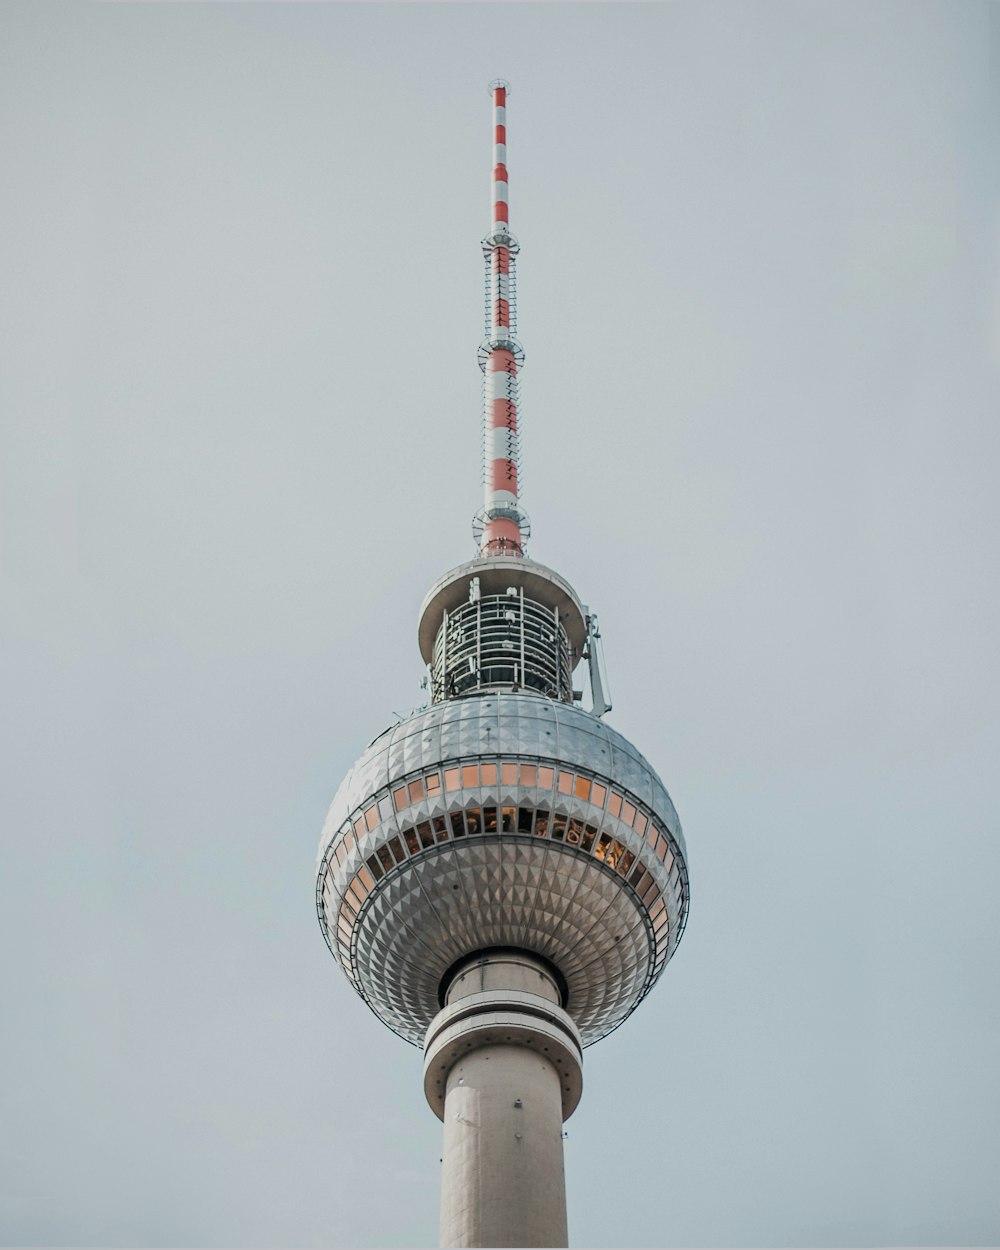 gray concrete tower